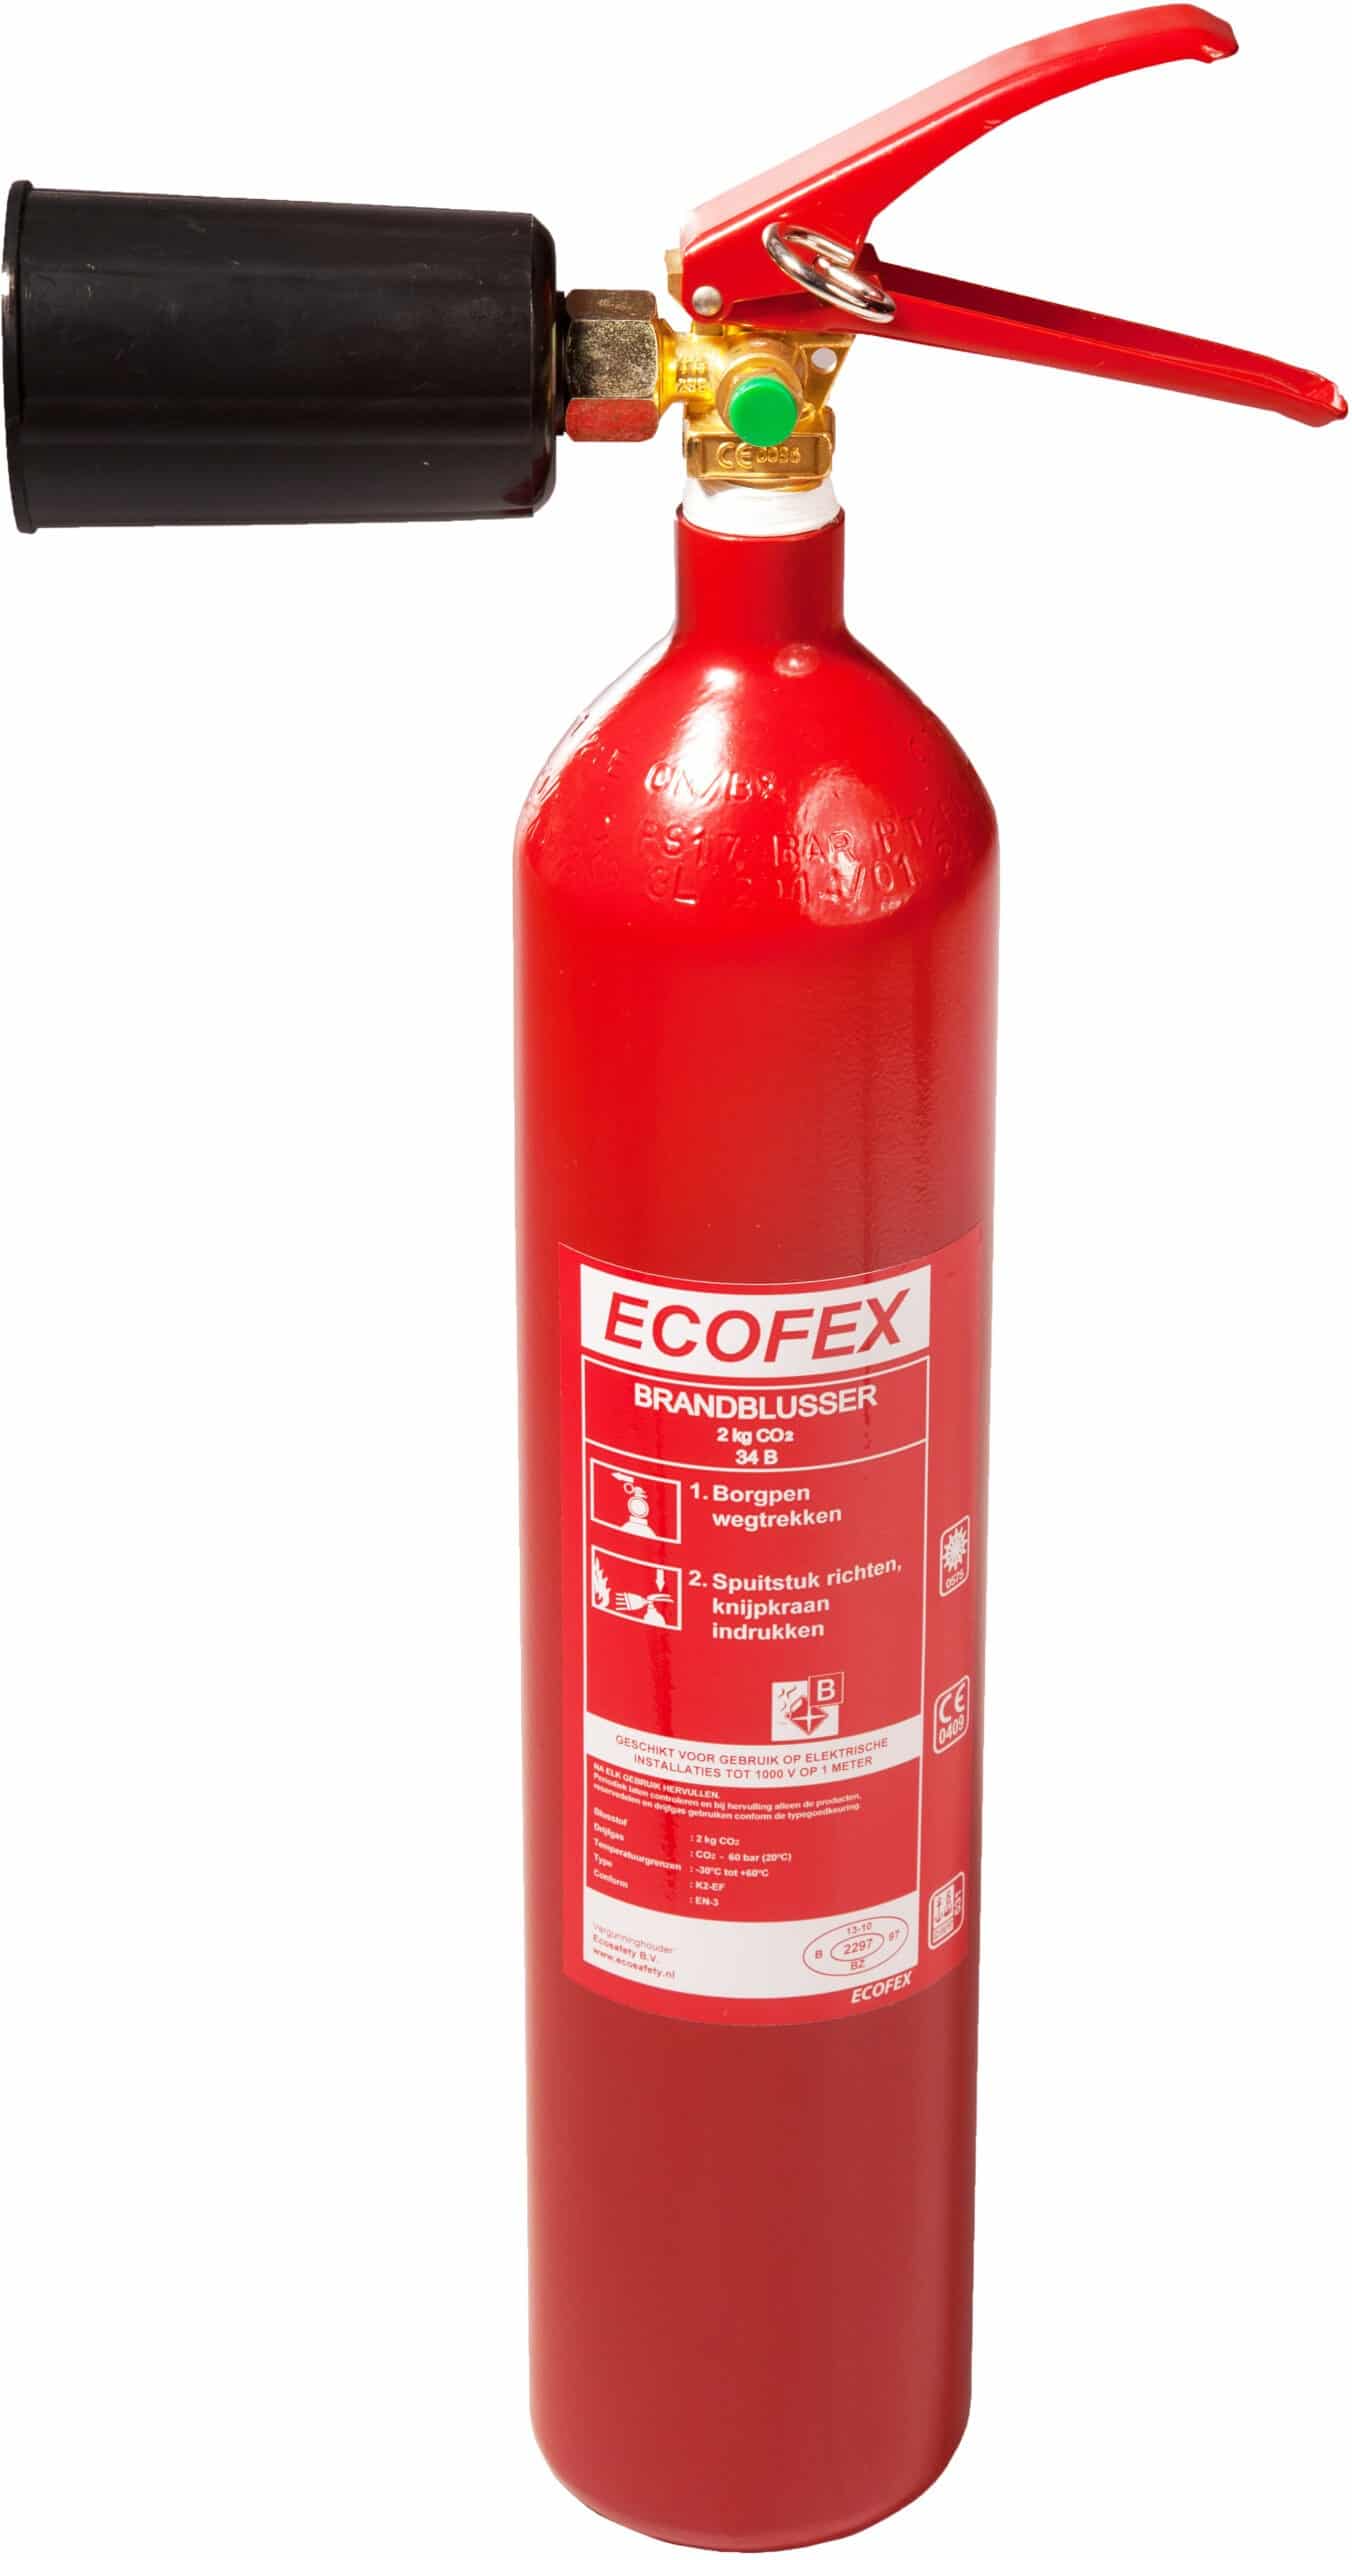 ECOFEX CO2 2kg brandblusser